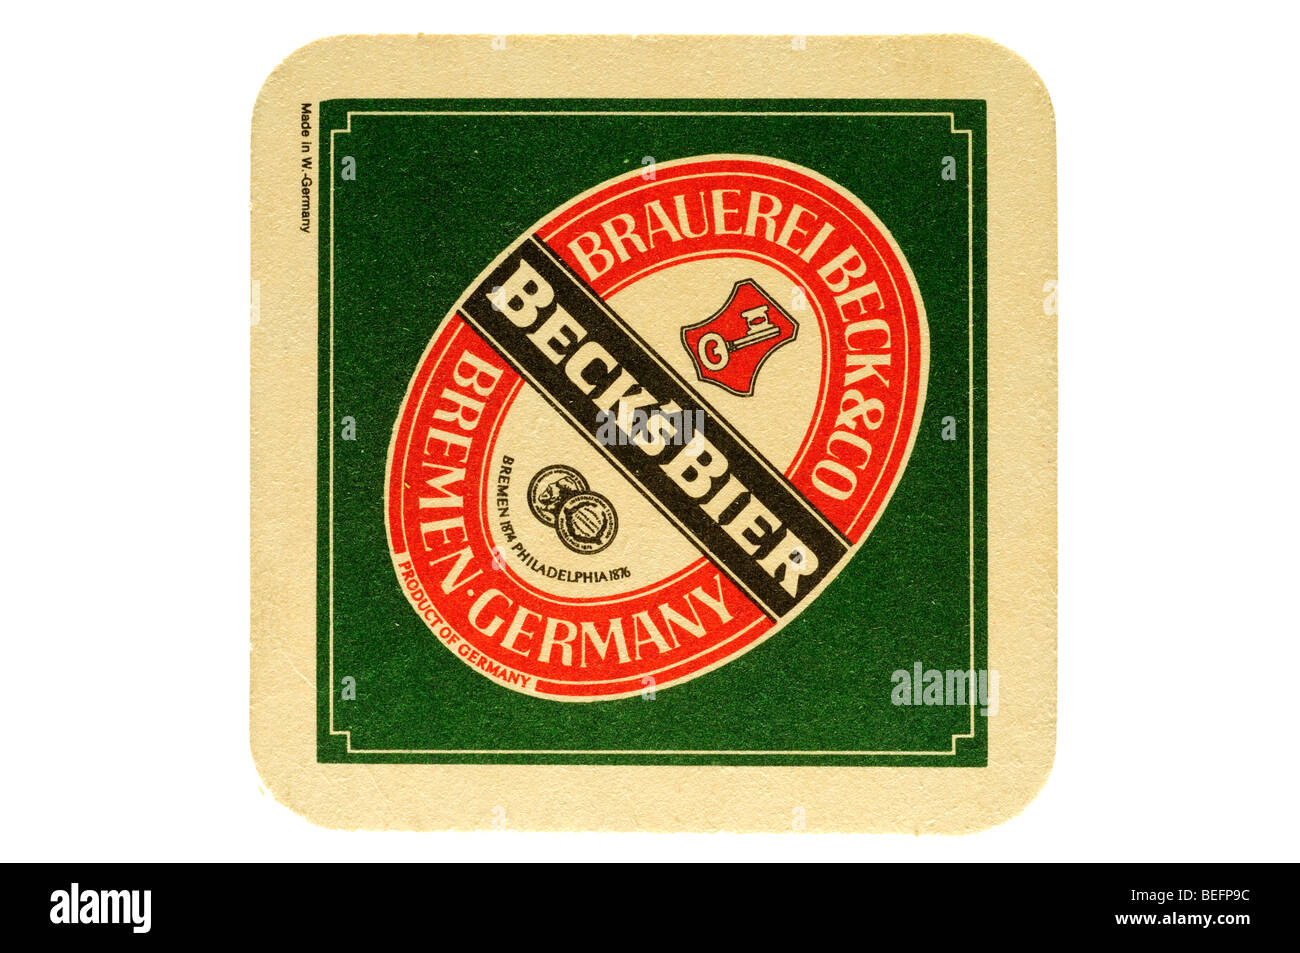 Brauerei Beck & co bremen allemagne becks bier Banque D'Images